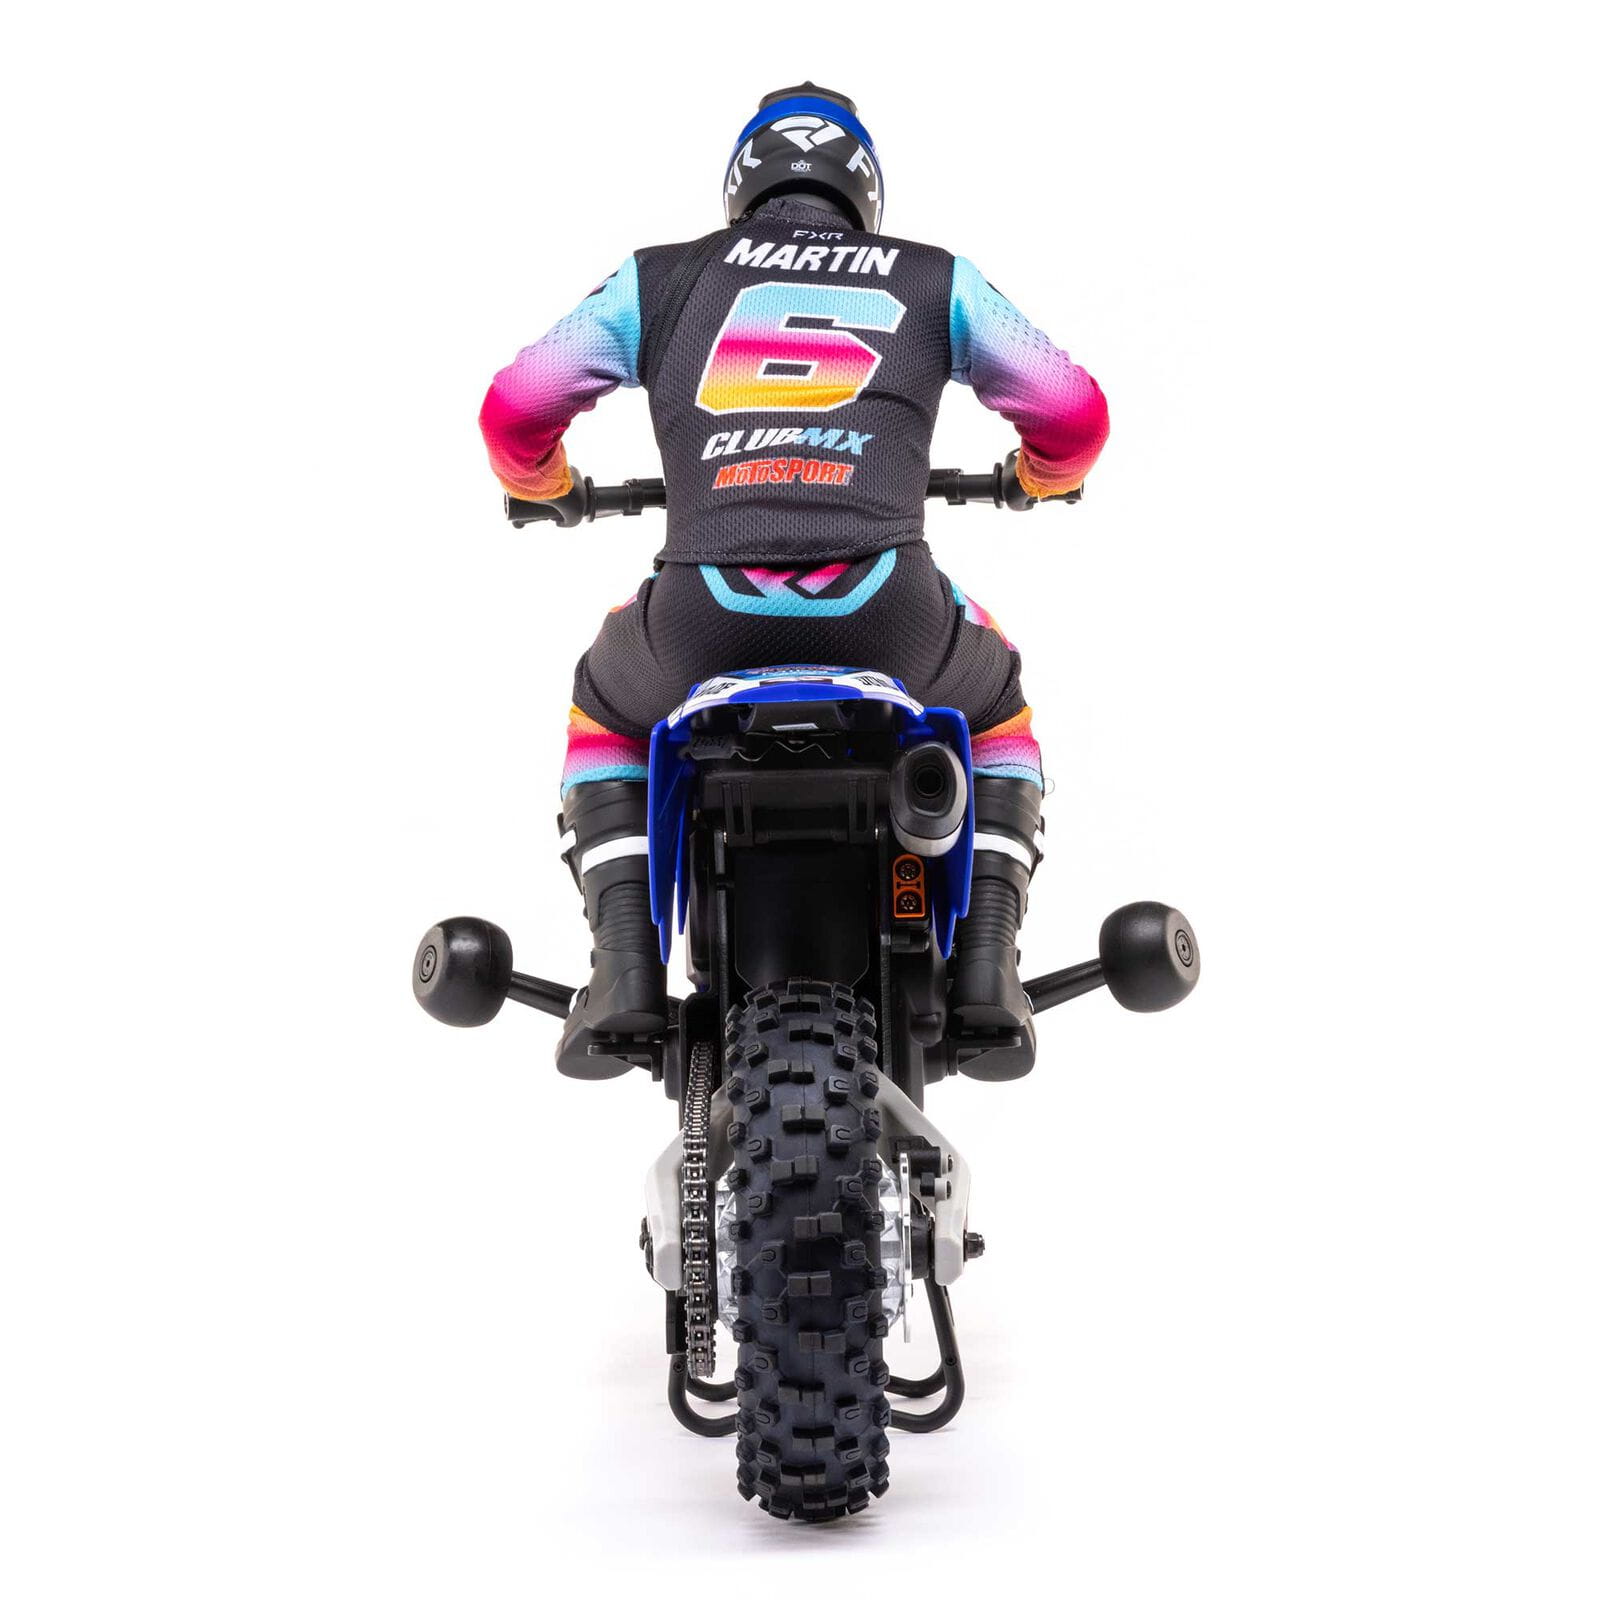 Losi Motocross RC Motorrad Promoto MX 1:4 RTR ClubMX